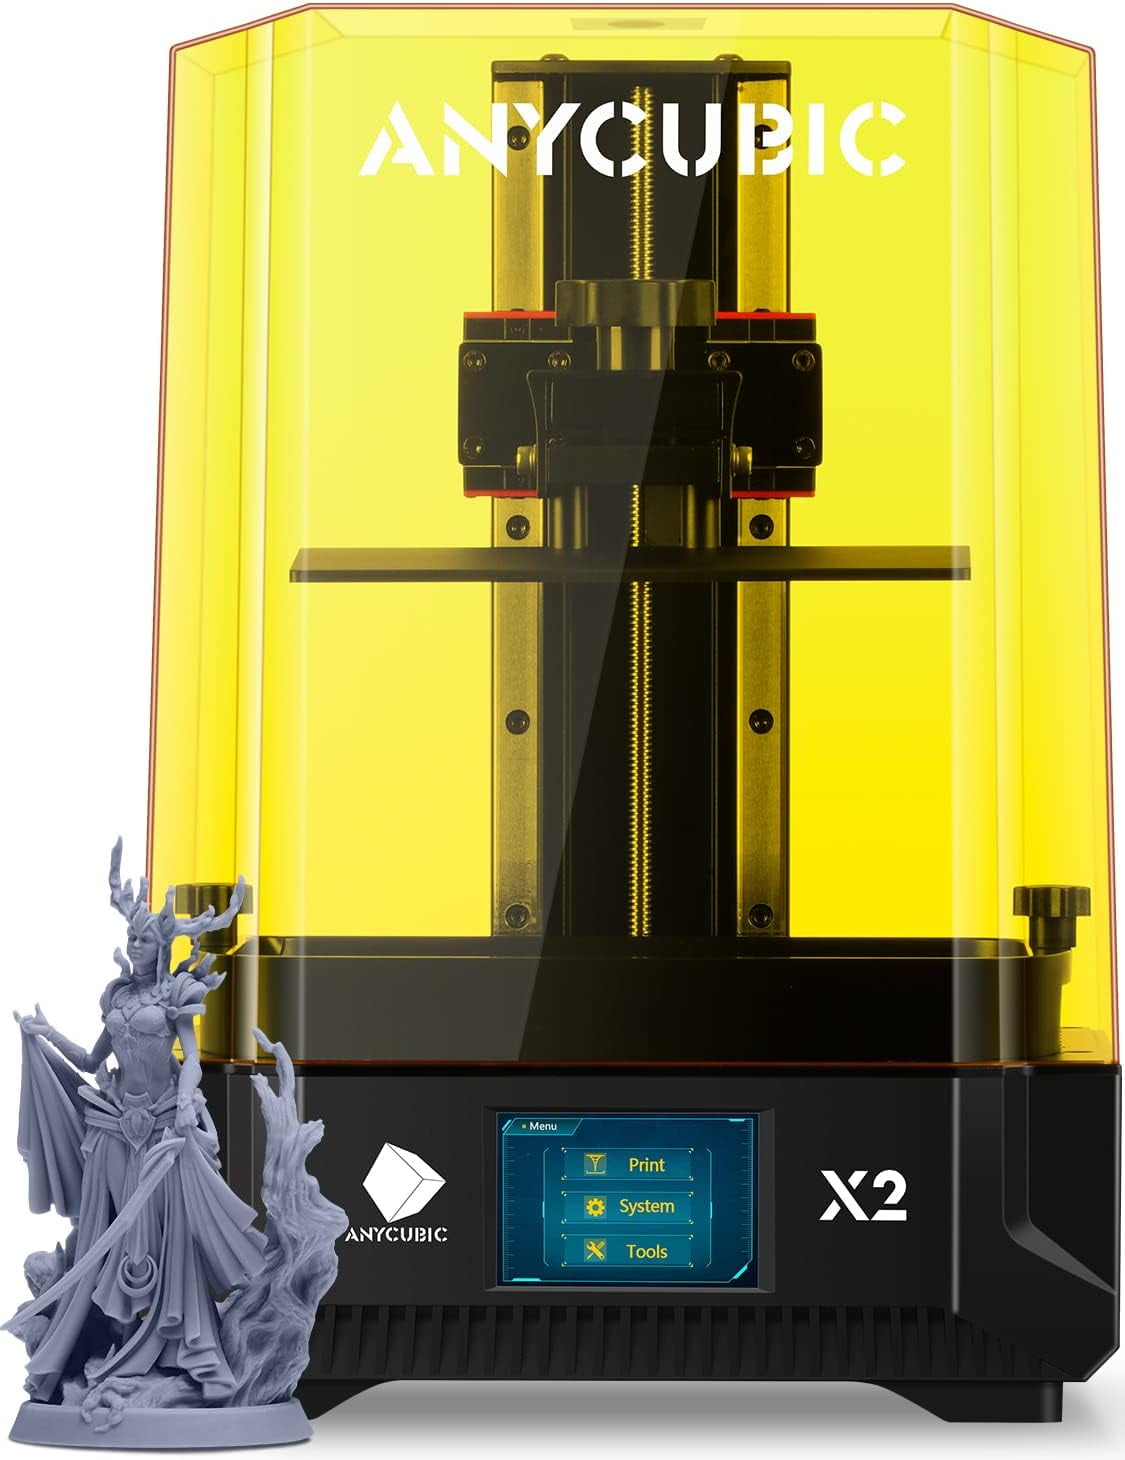 UniFormation 405nm UV Resin Curing Station 10.2'' – UniFormation 3D Printer